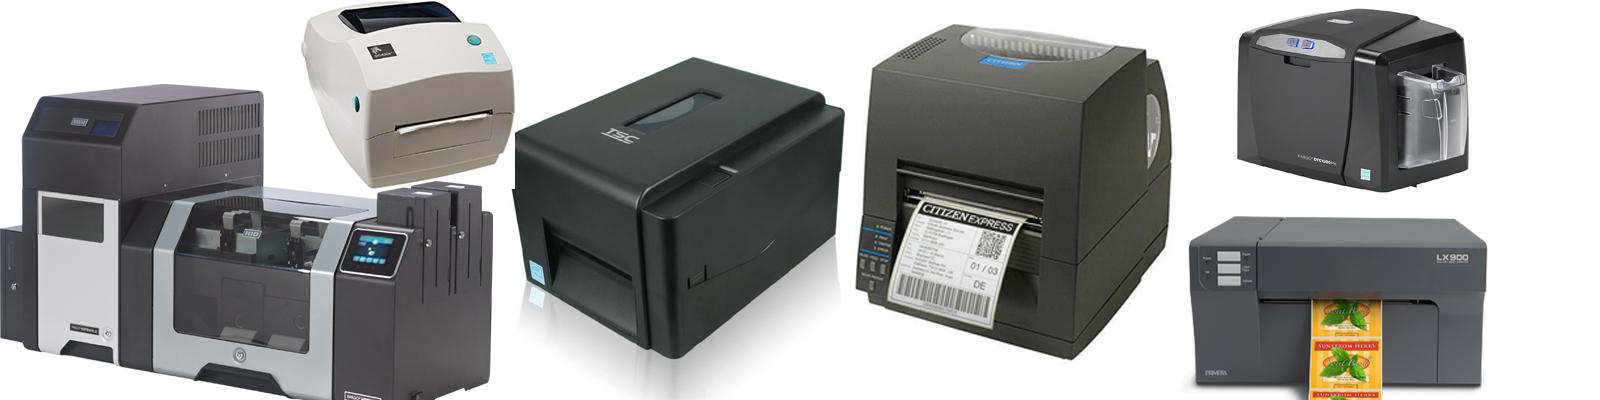 barcode label Printer